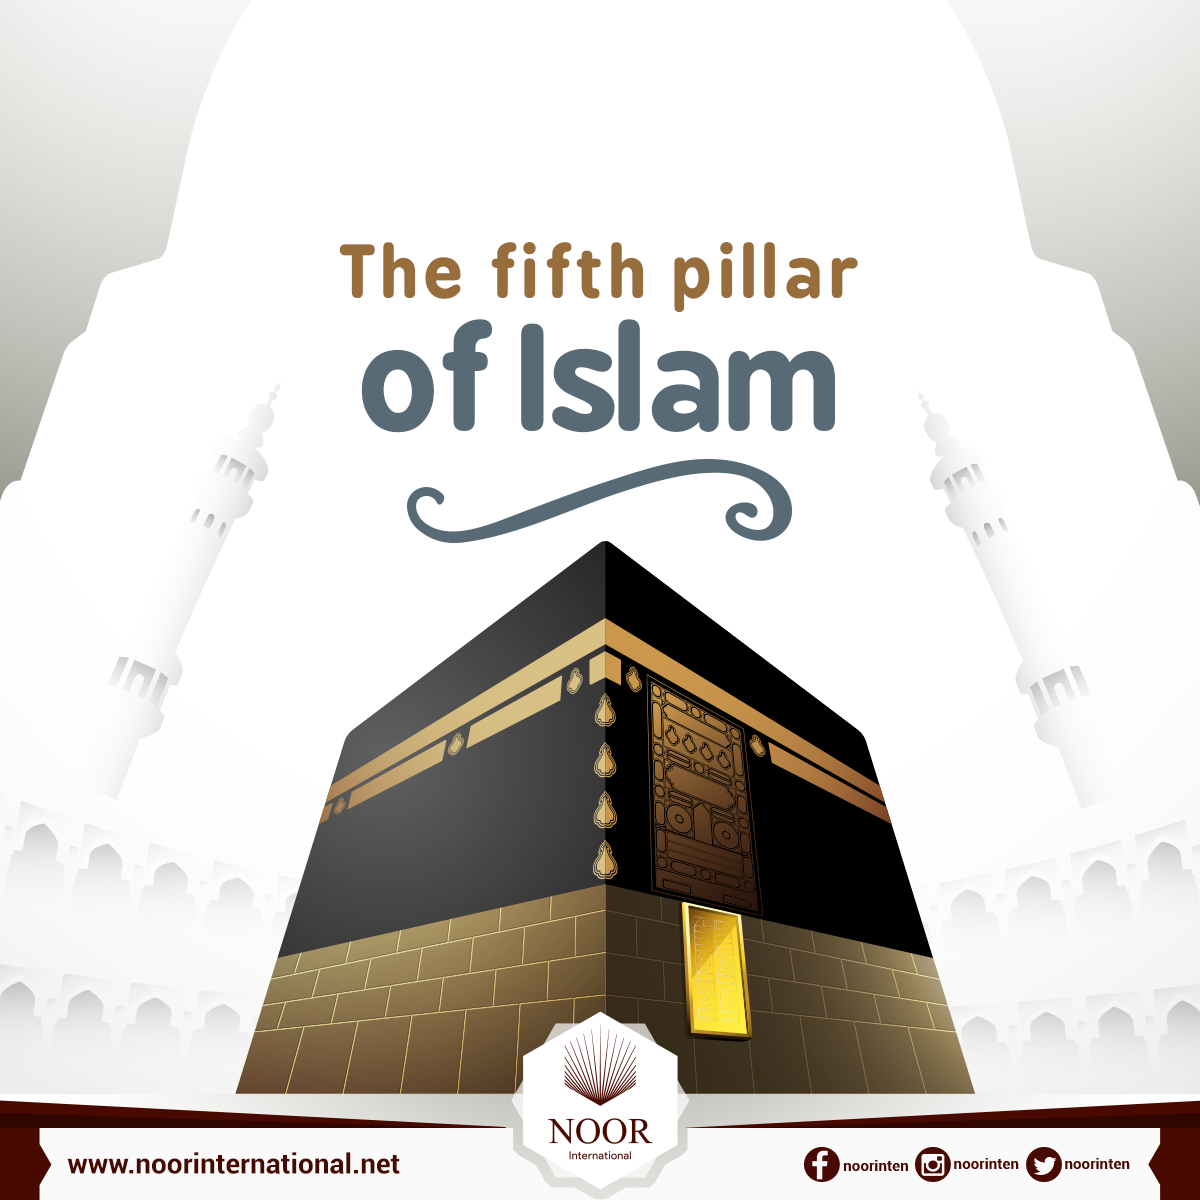 The fifth pillar of Islam